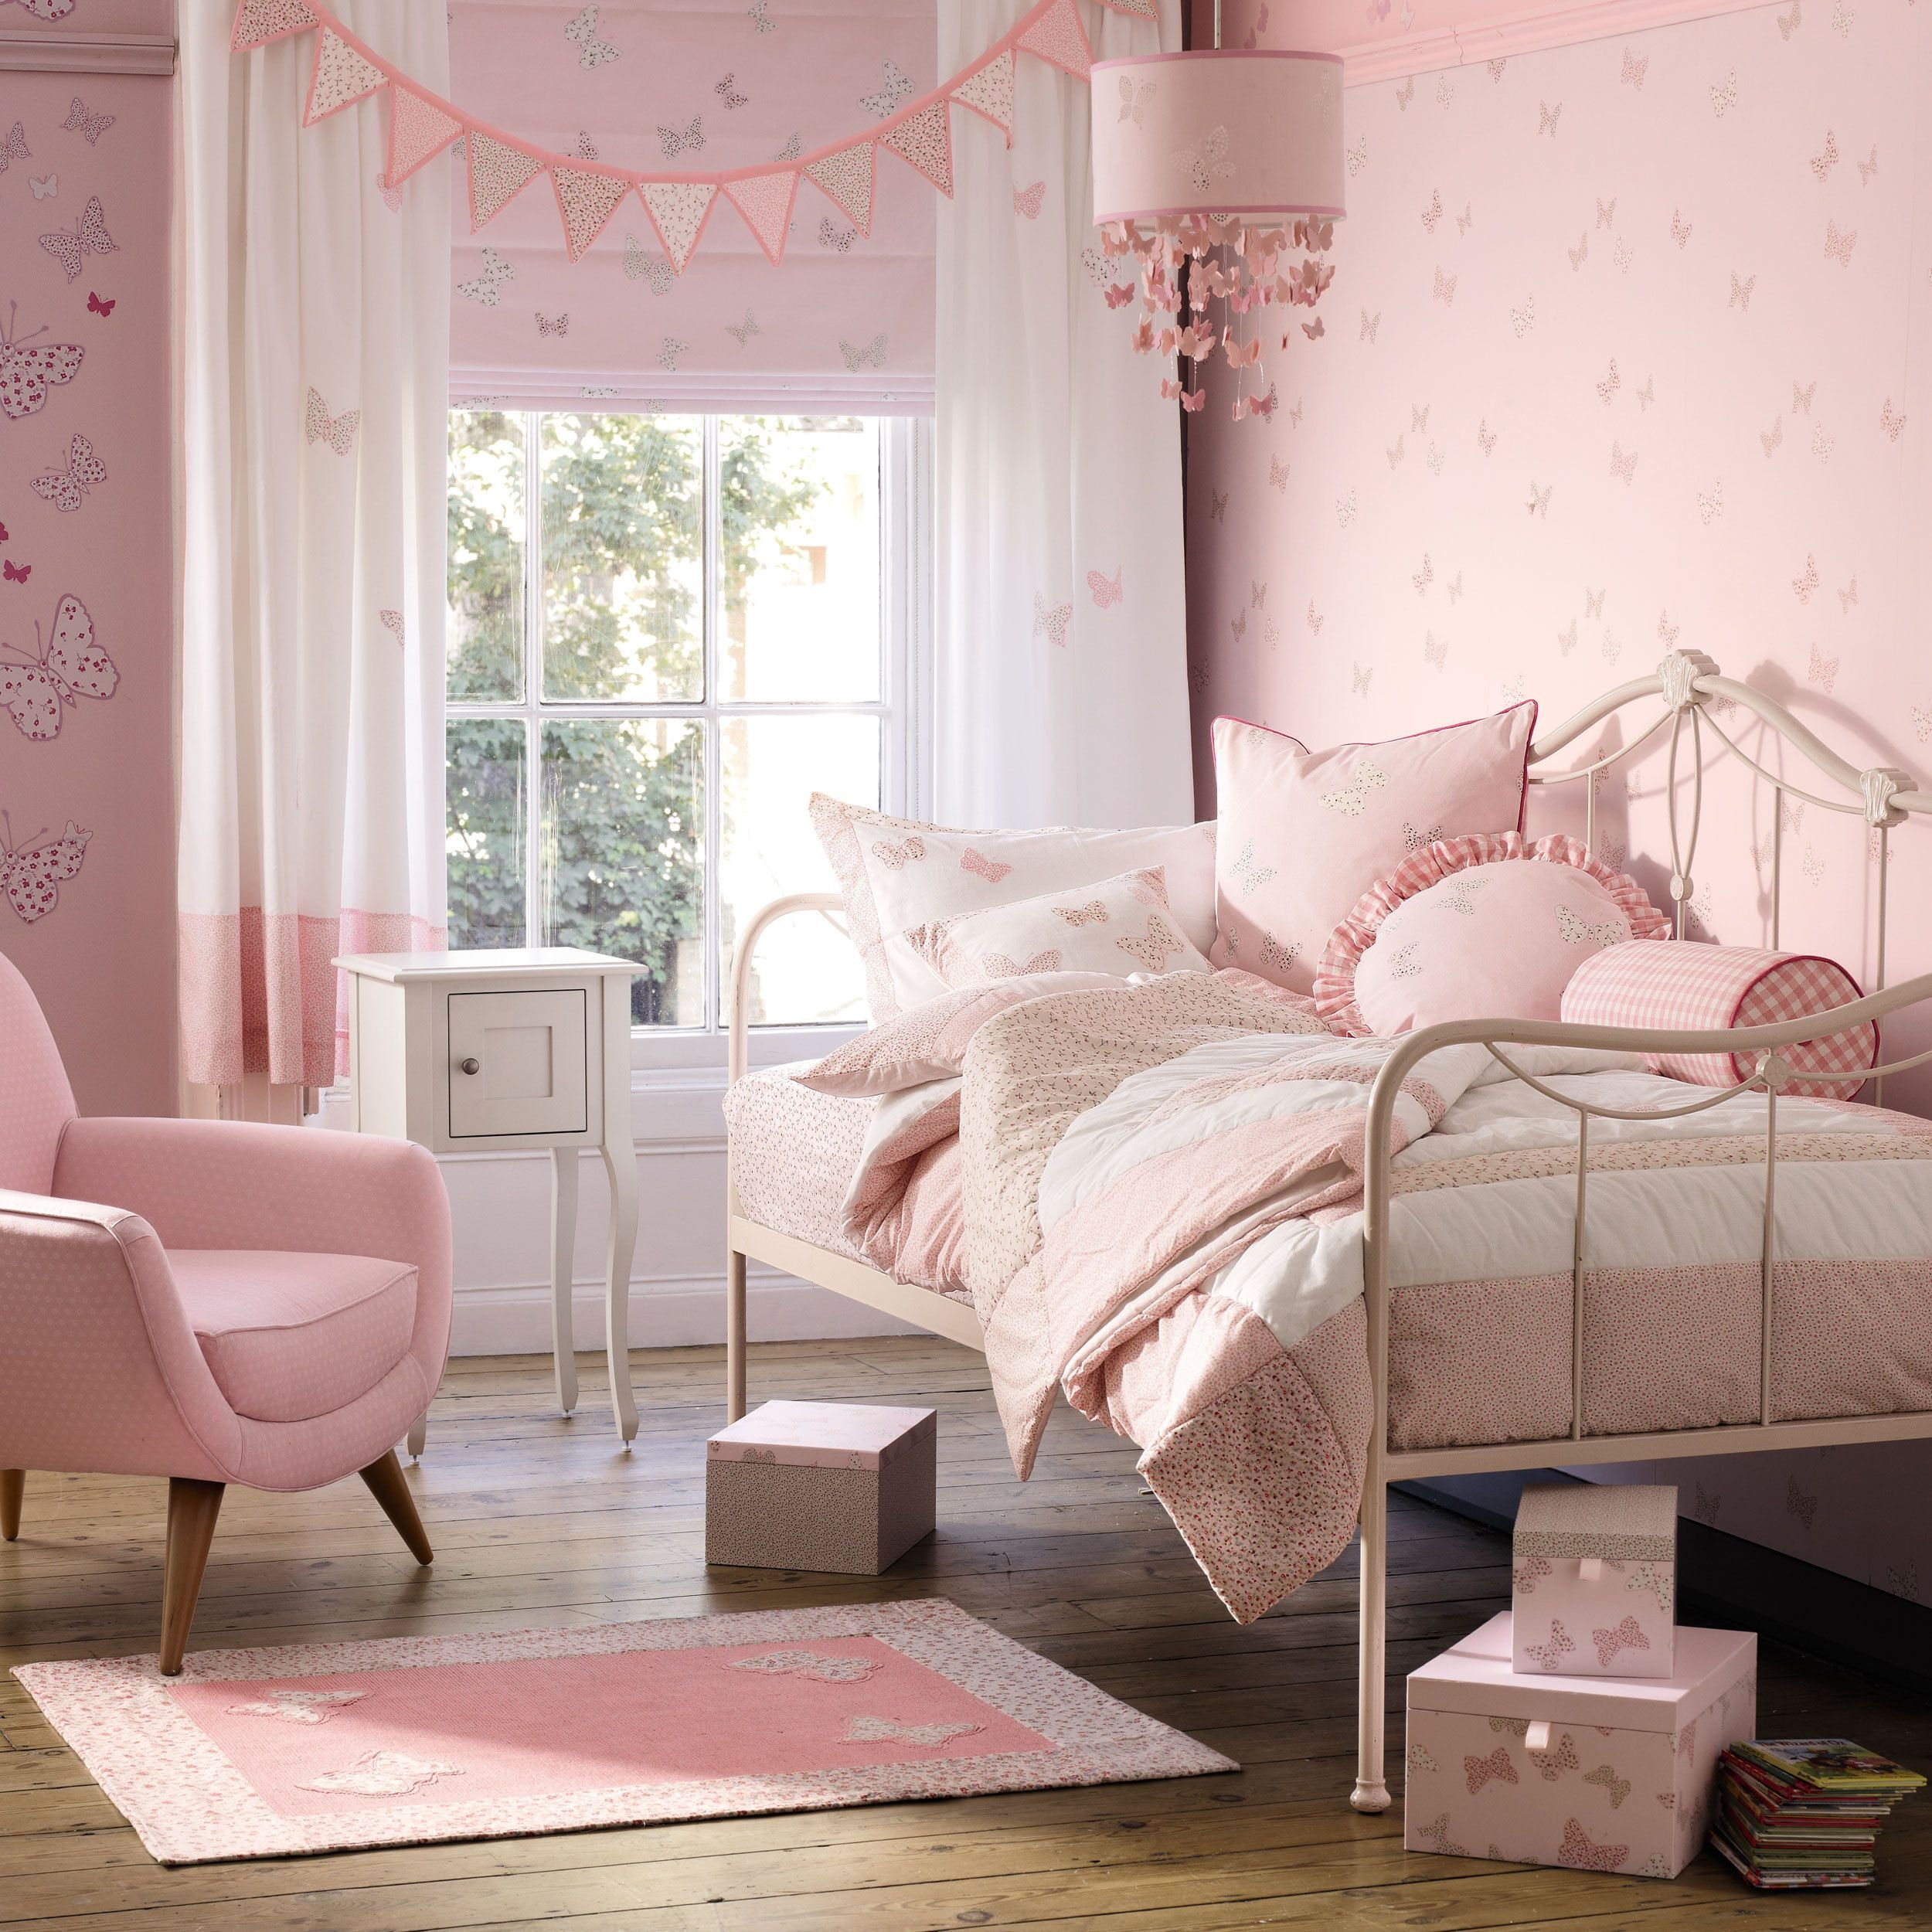 Комната в розовых тонах. Комната для девочки розового цвета. Розовая спальня для девочки.